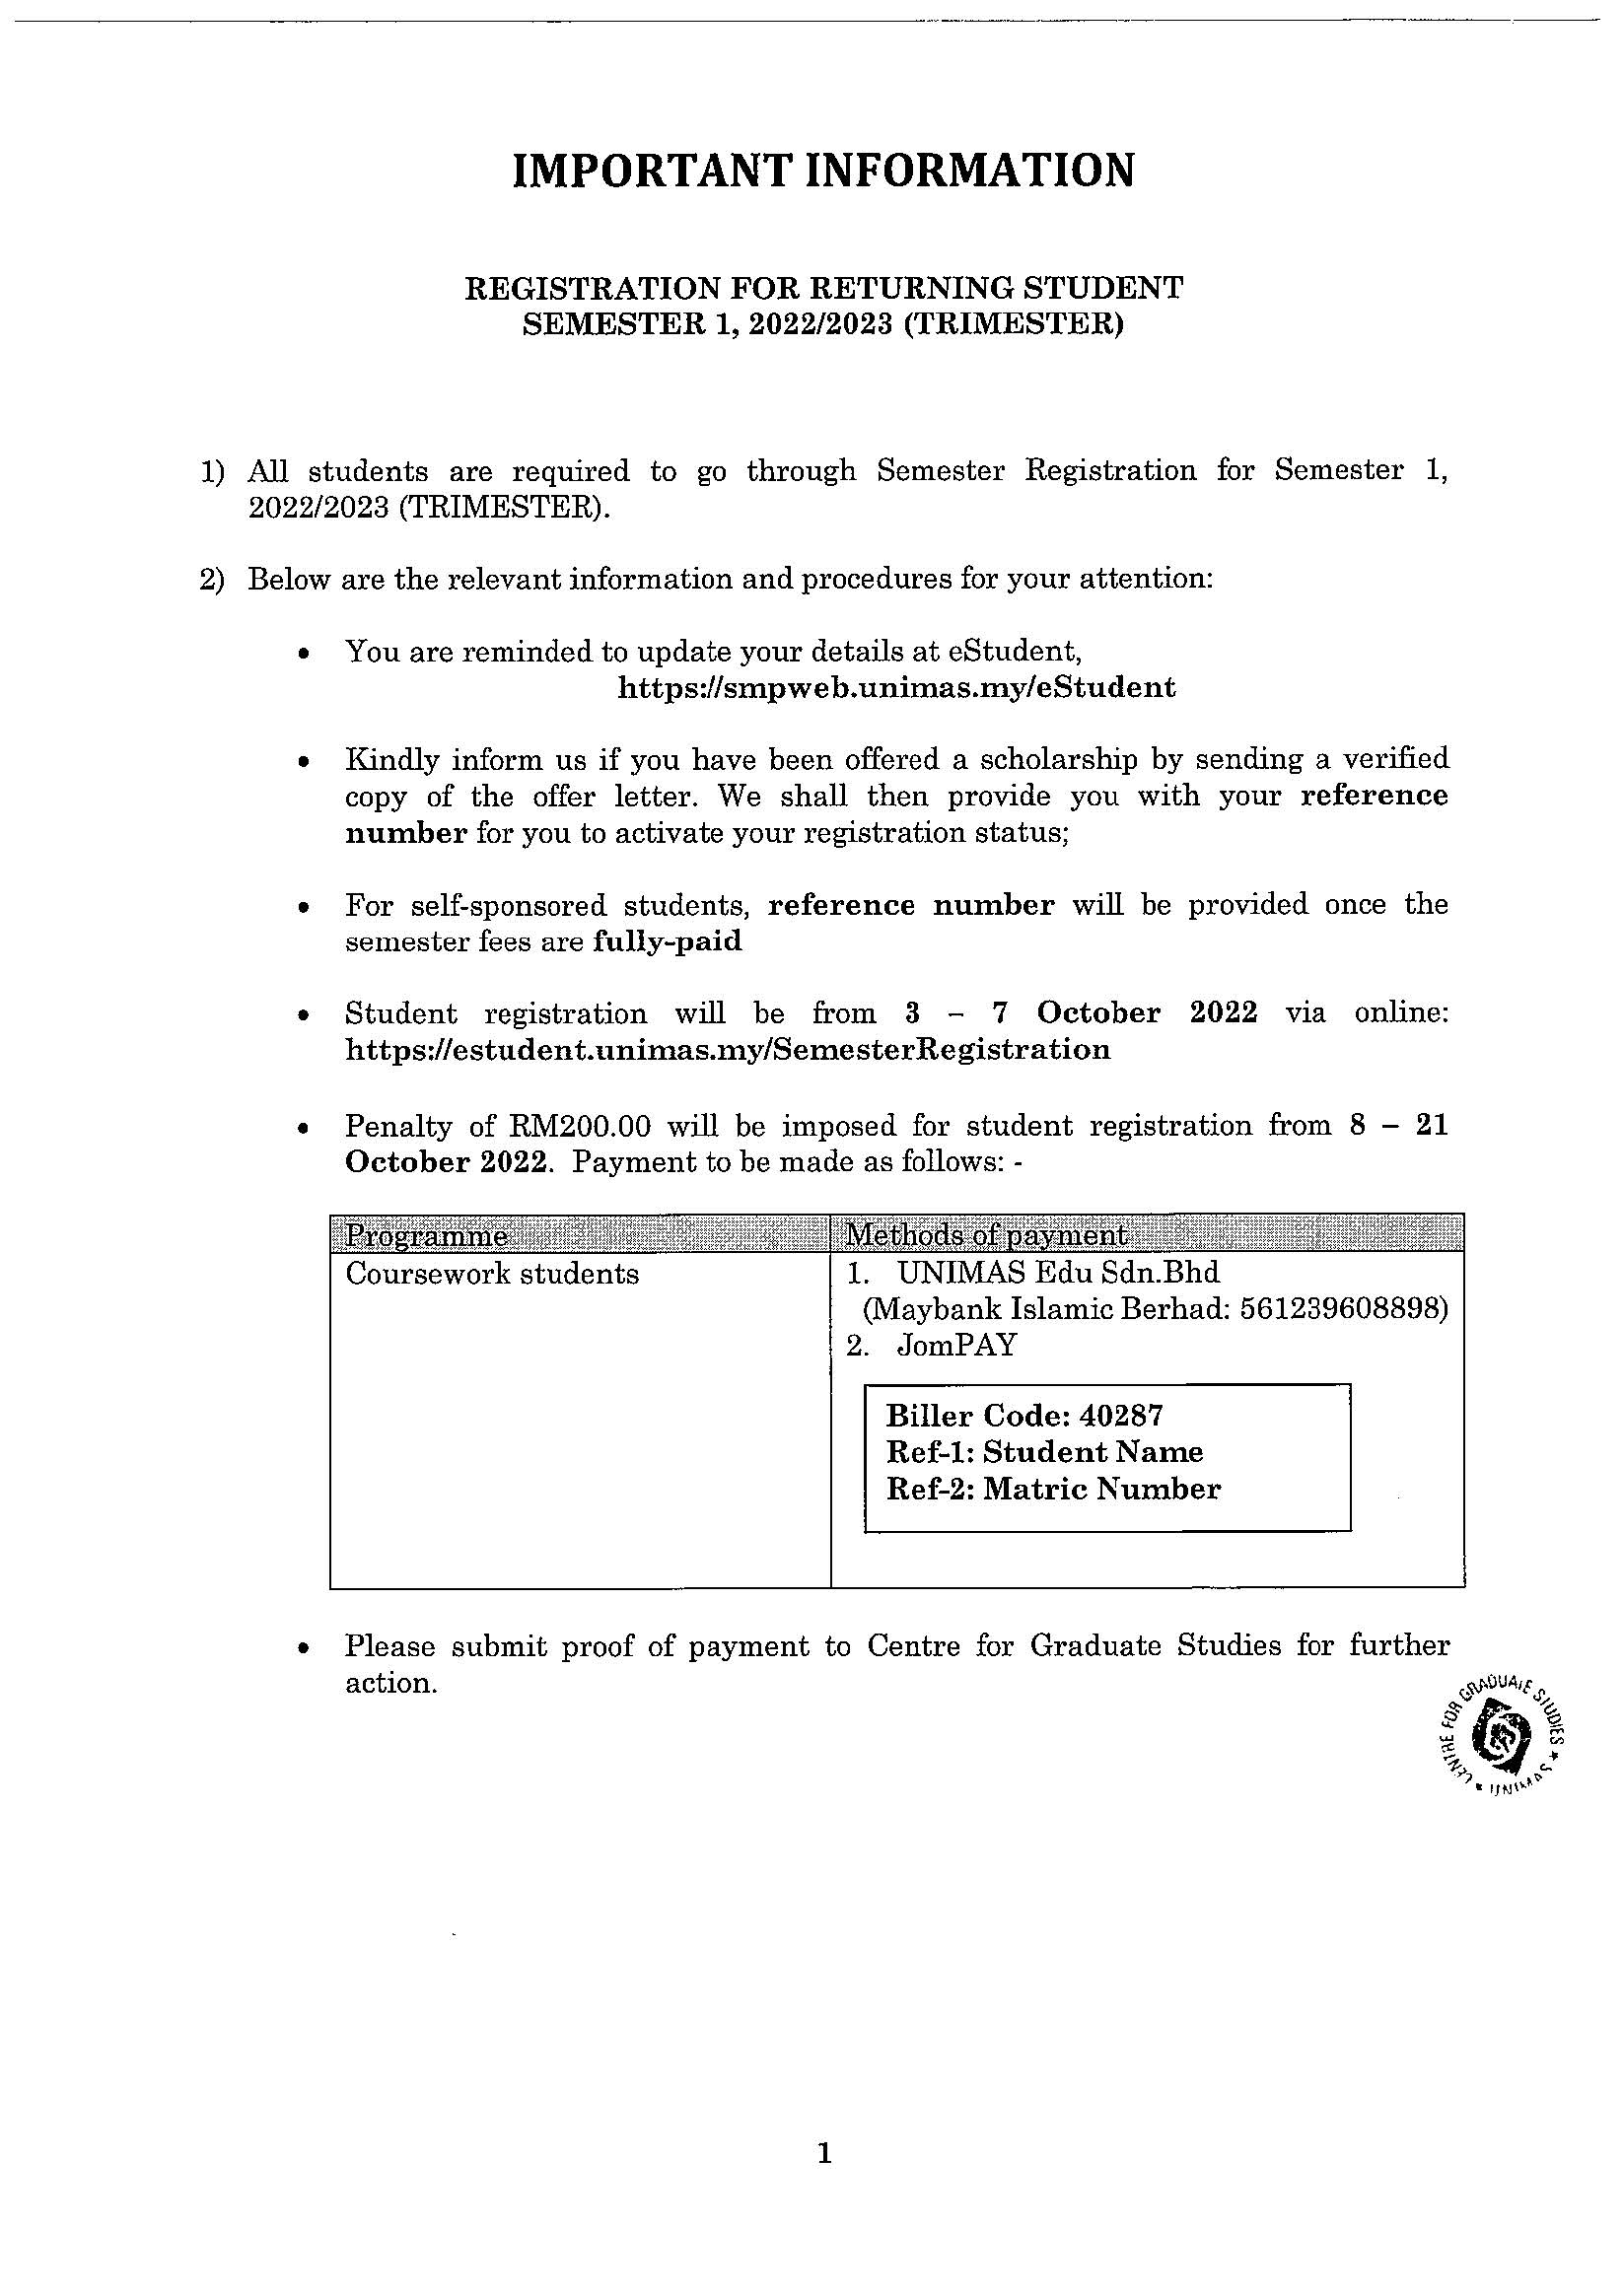 amendments notice of registration for returning student Sem 1 2022 2023 (Trimester).jpg